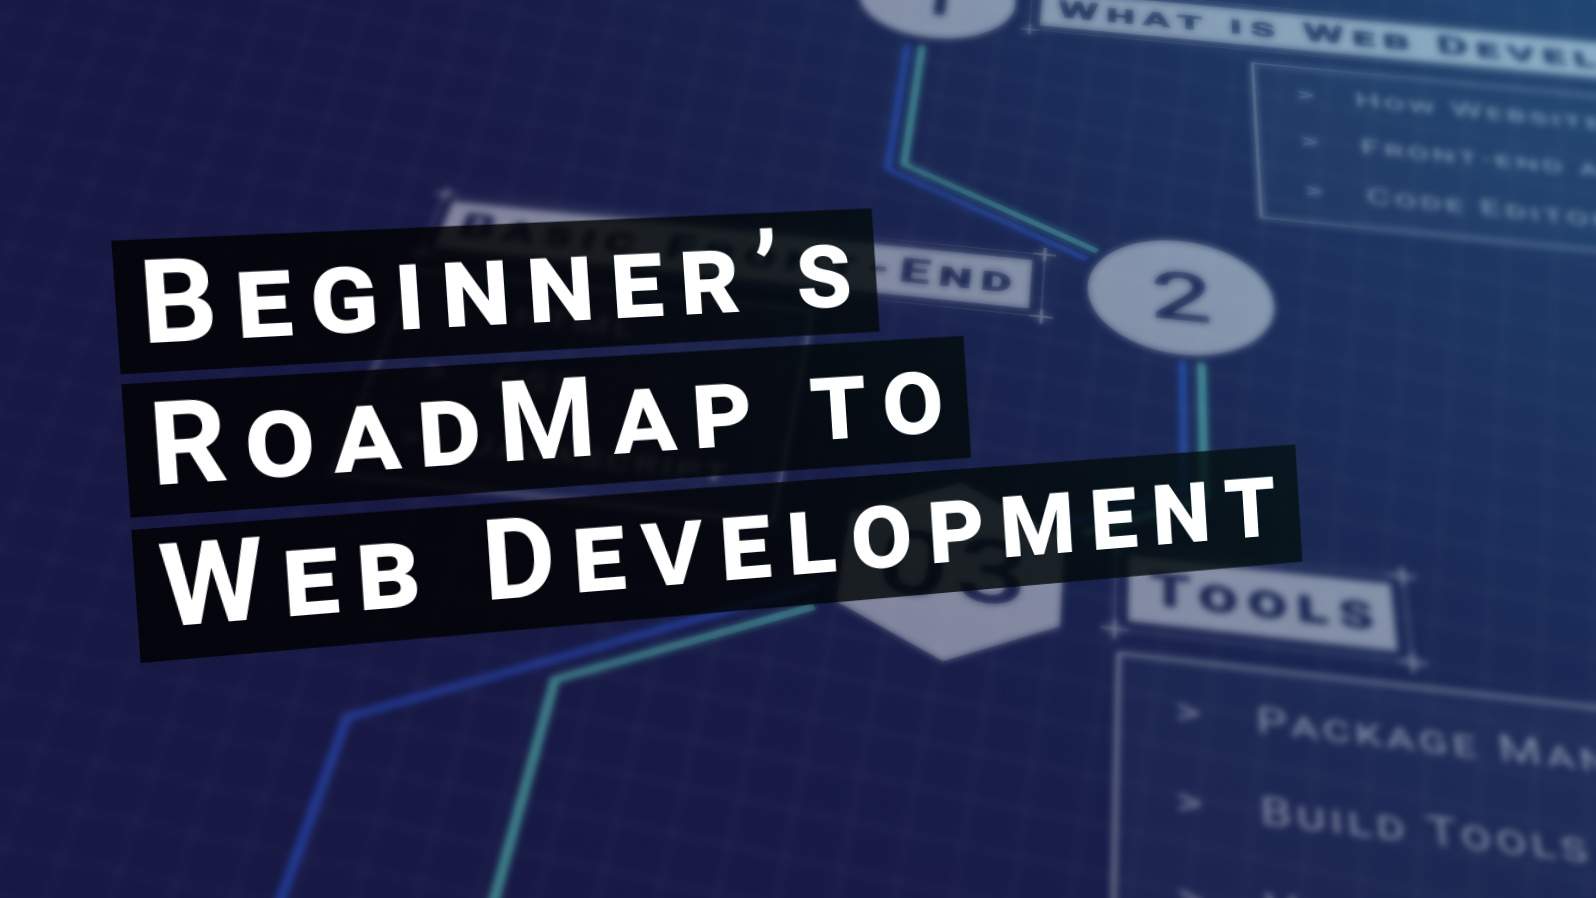 Beginner's roadmap to web development